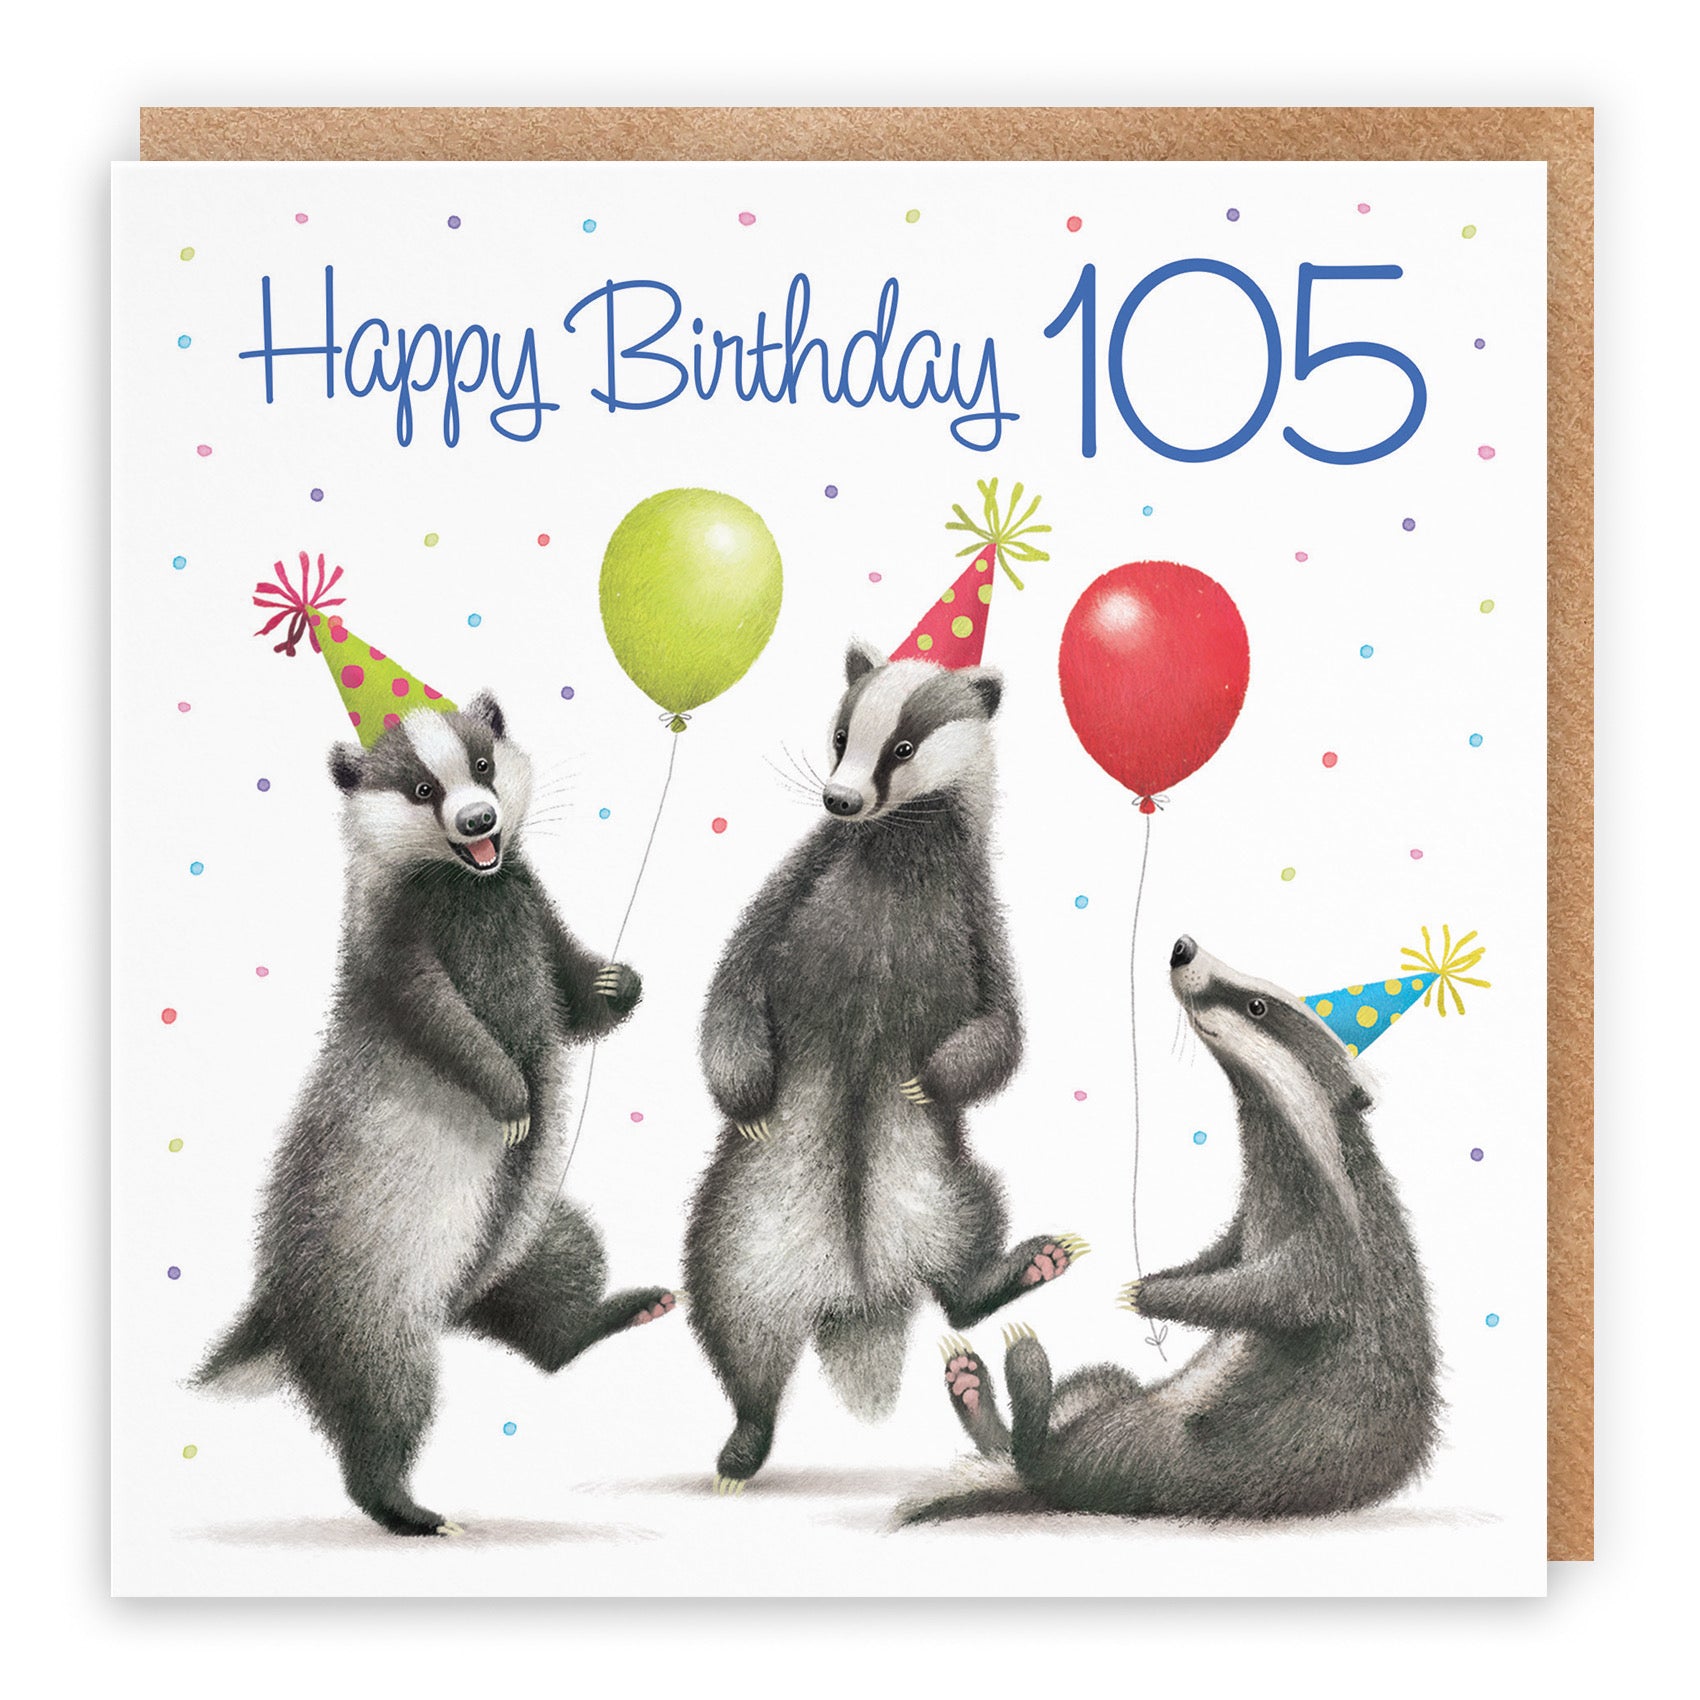 Badgers 105th Birthday Card Milo's Gallery - Default Title (B0CRXYS7SV)